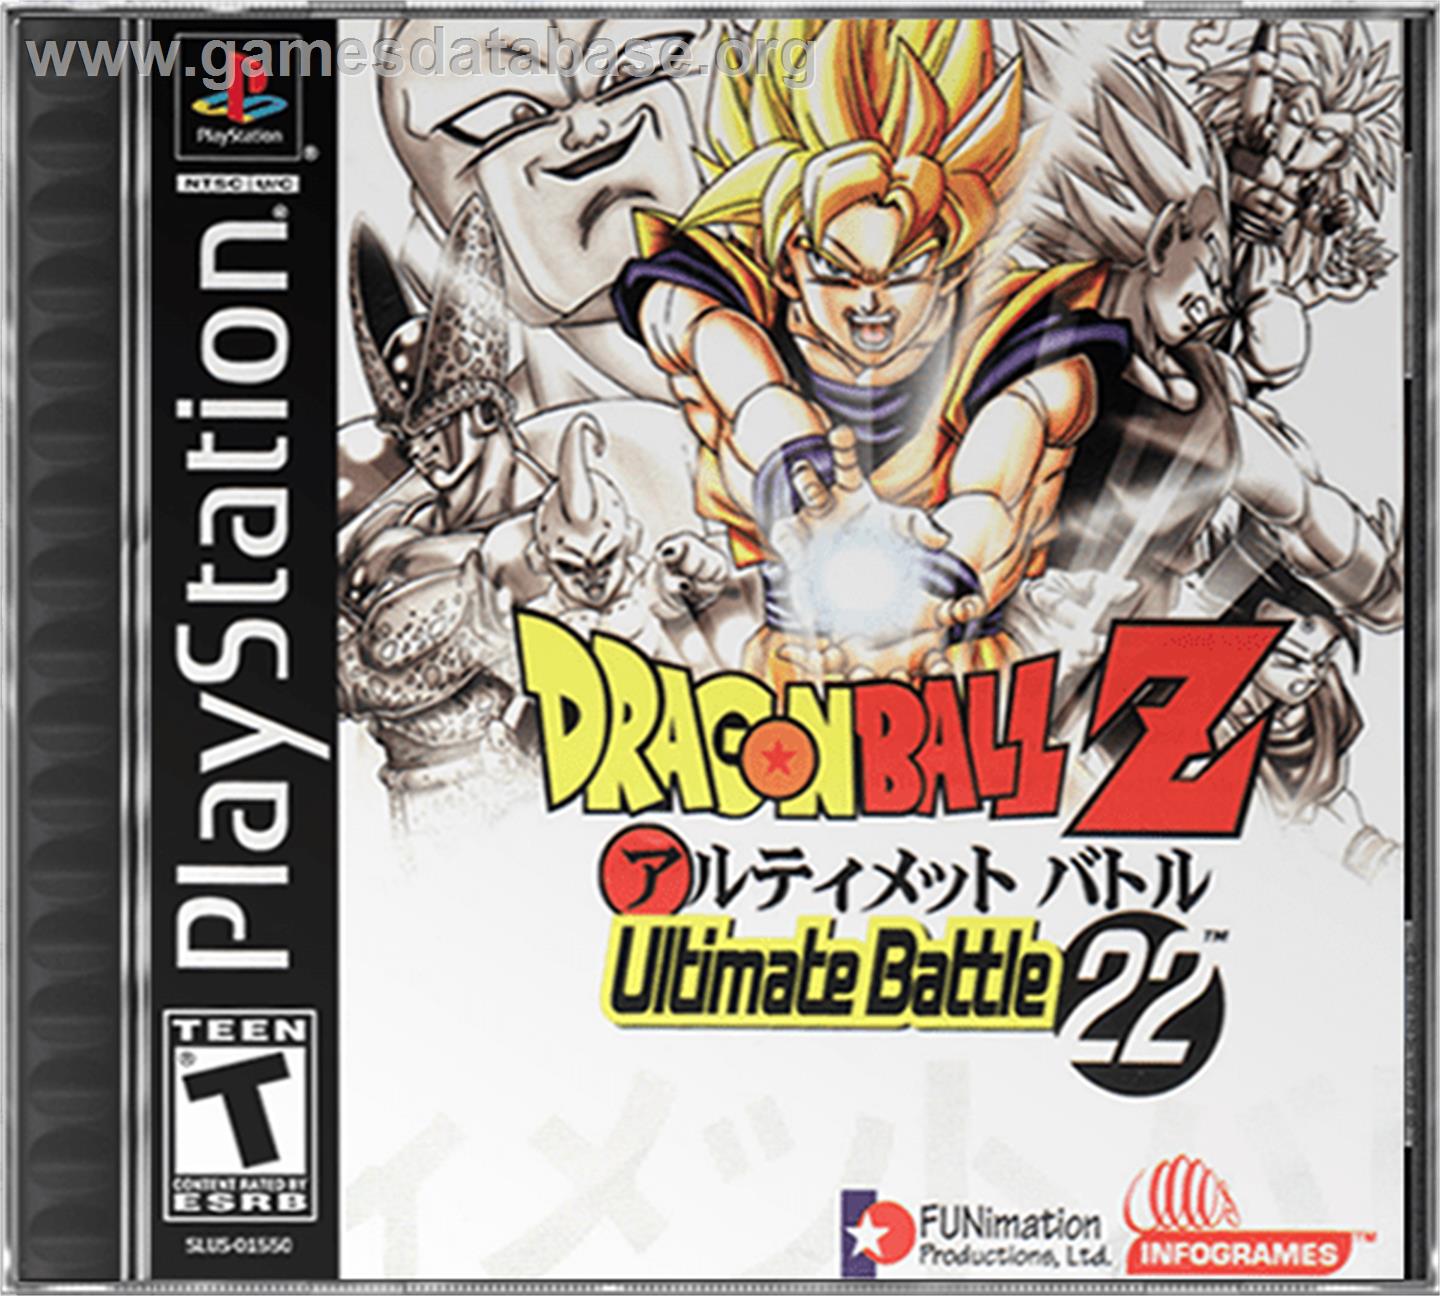 Dragon Ball Z: Ultimate Battle 22 - Sony Playstation - Artwork - Box